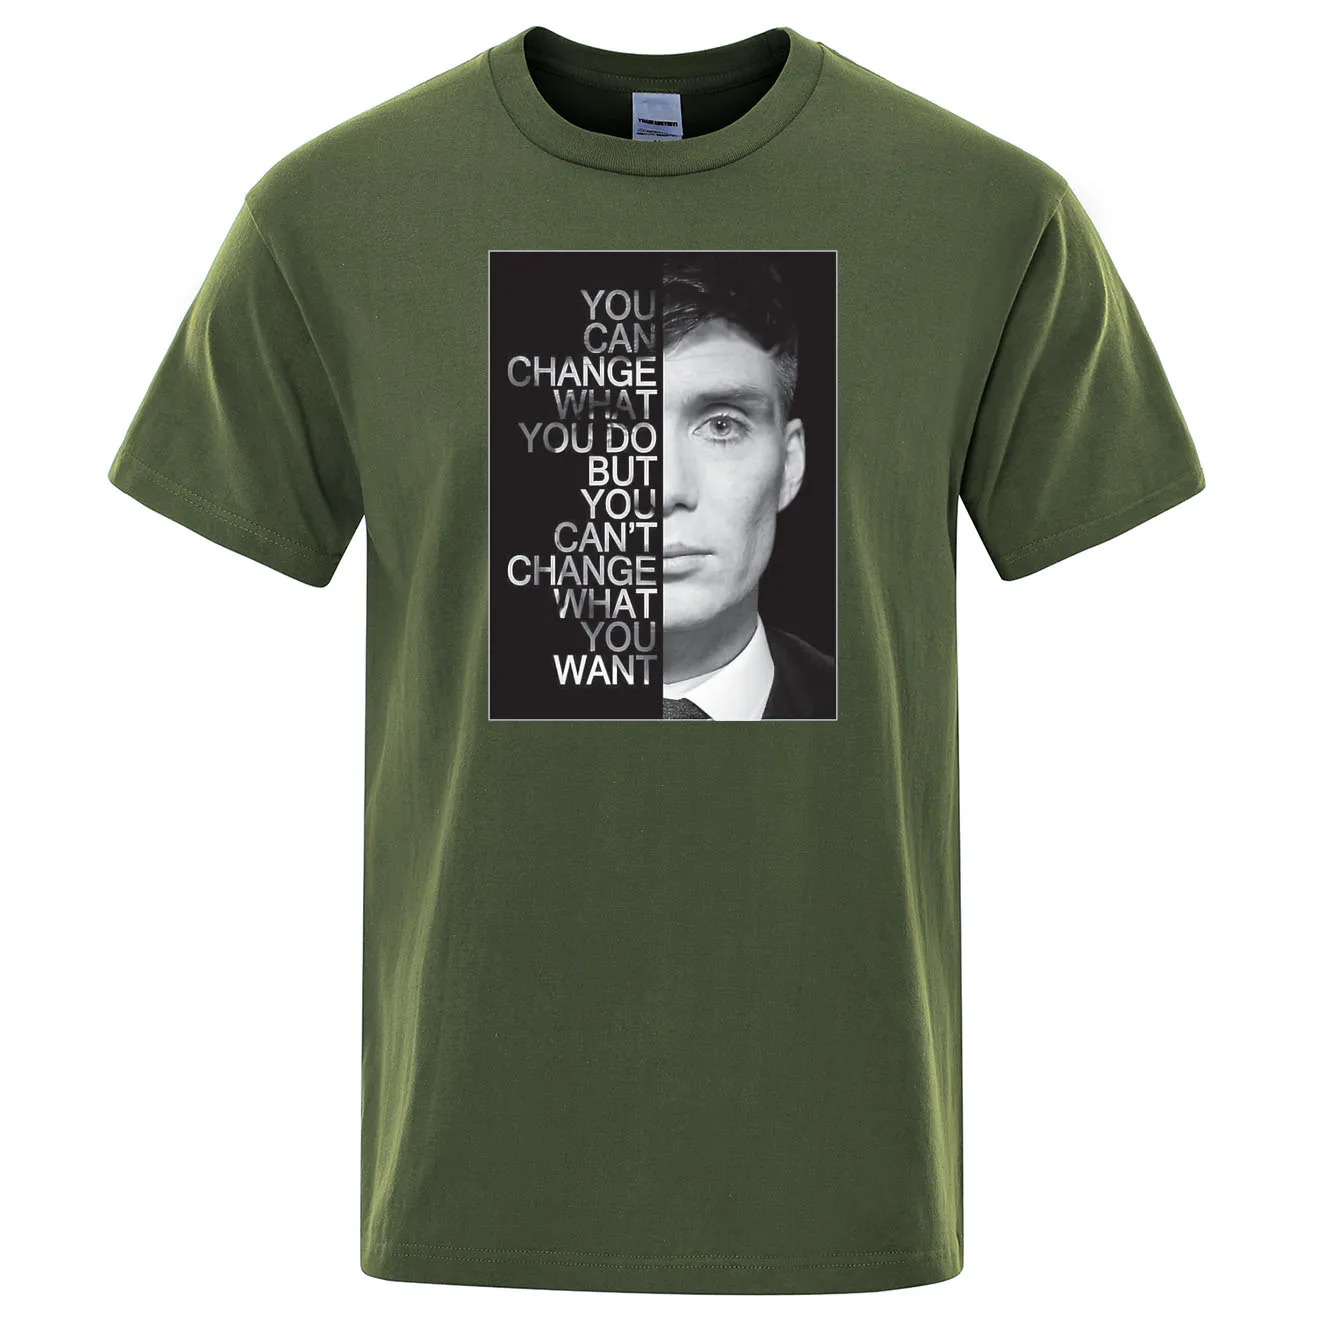 Г. Летняя футболка мужская футболка с короткими рукавами и принтом «Peaky blinds tv Show» семейная уличная одежда в стиле «хип-хоп», мужские футболки - Цвет: army green 6